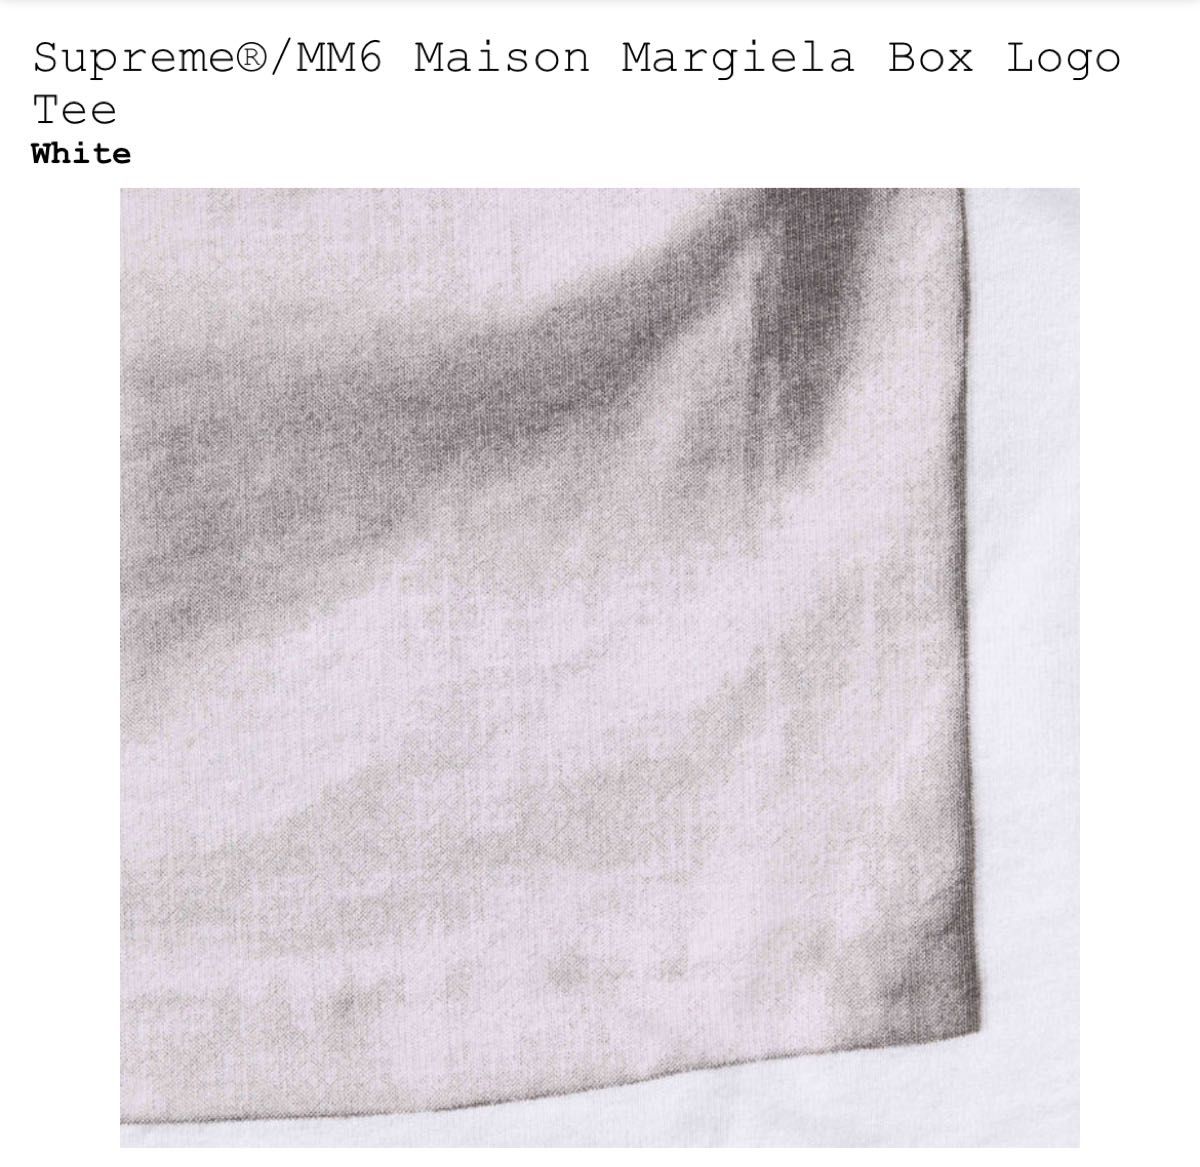 Supreme MM6 Maison Margiela Box Logo Tee シュプリーム ボックスロゴ Tシャツ